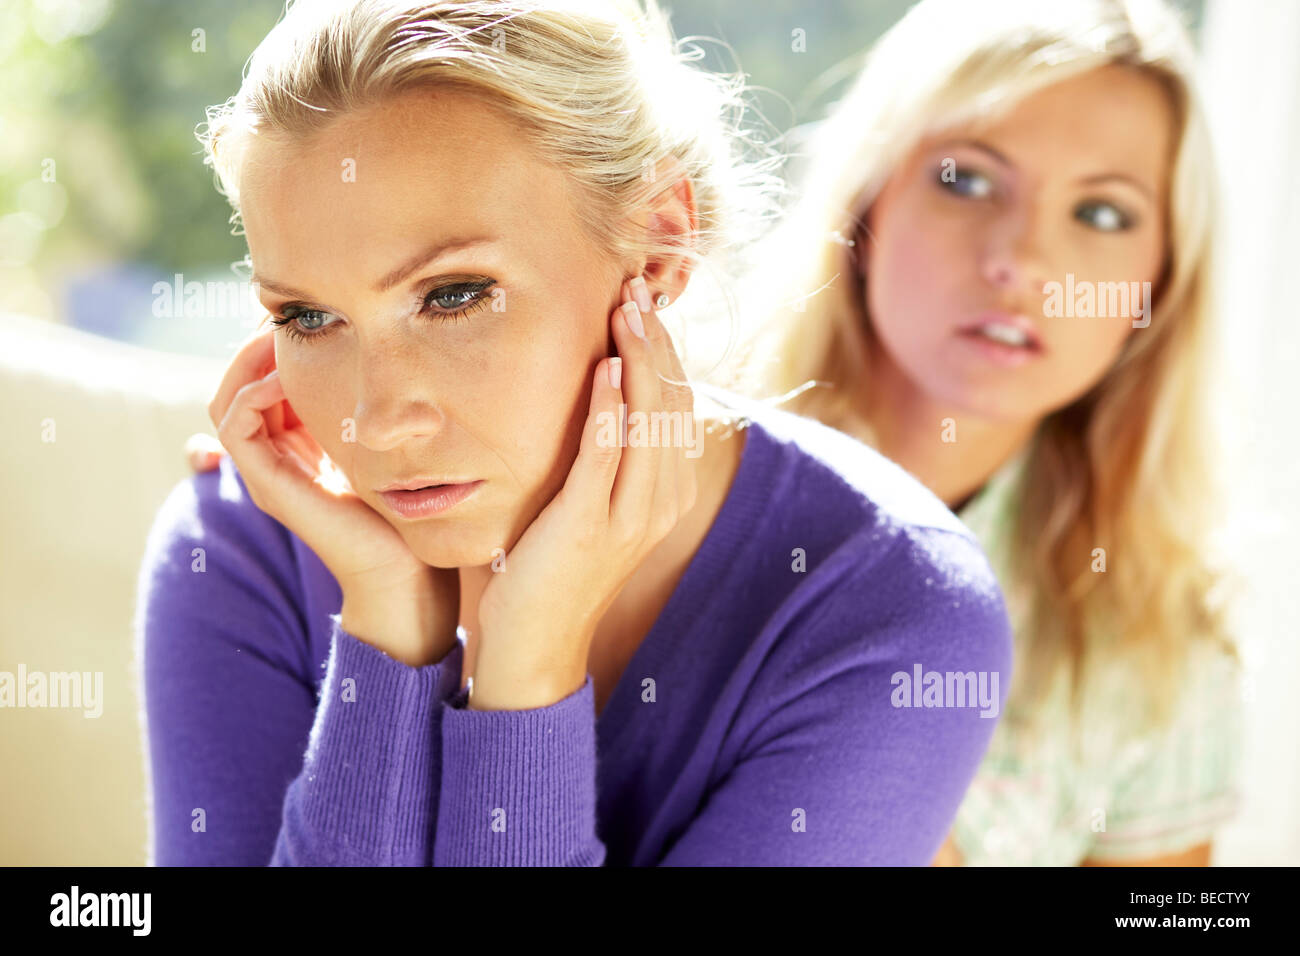 2 women arguing Stock Photo